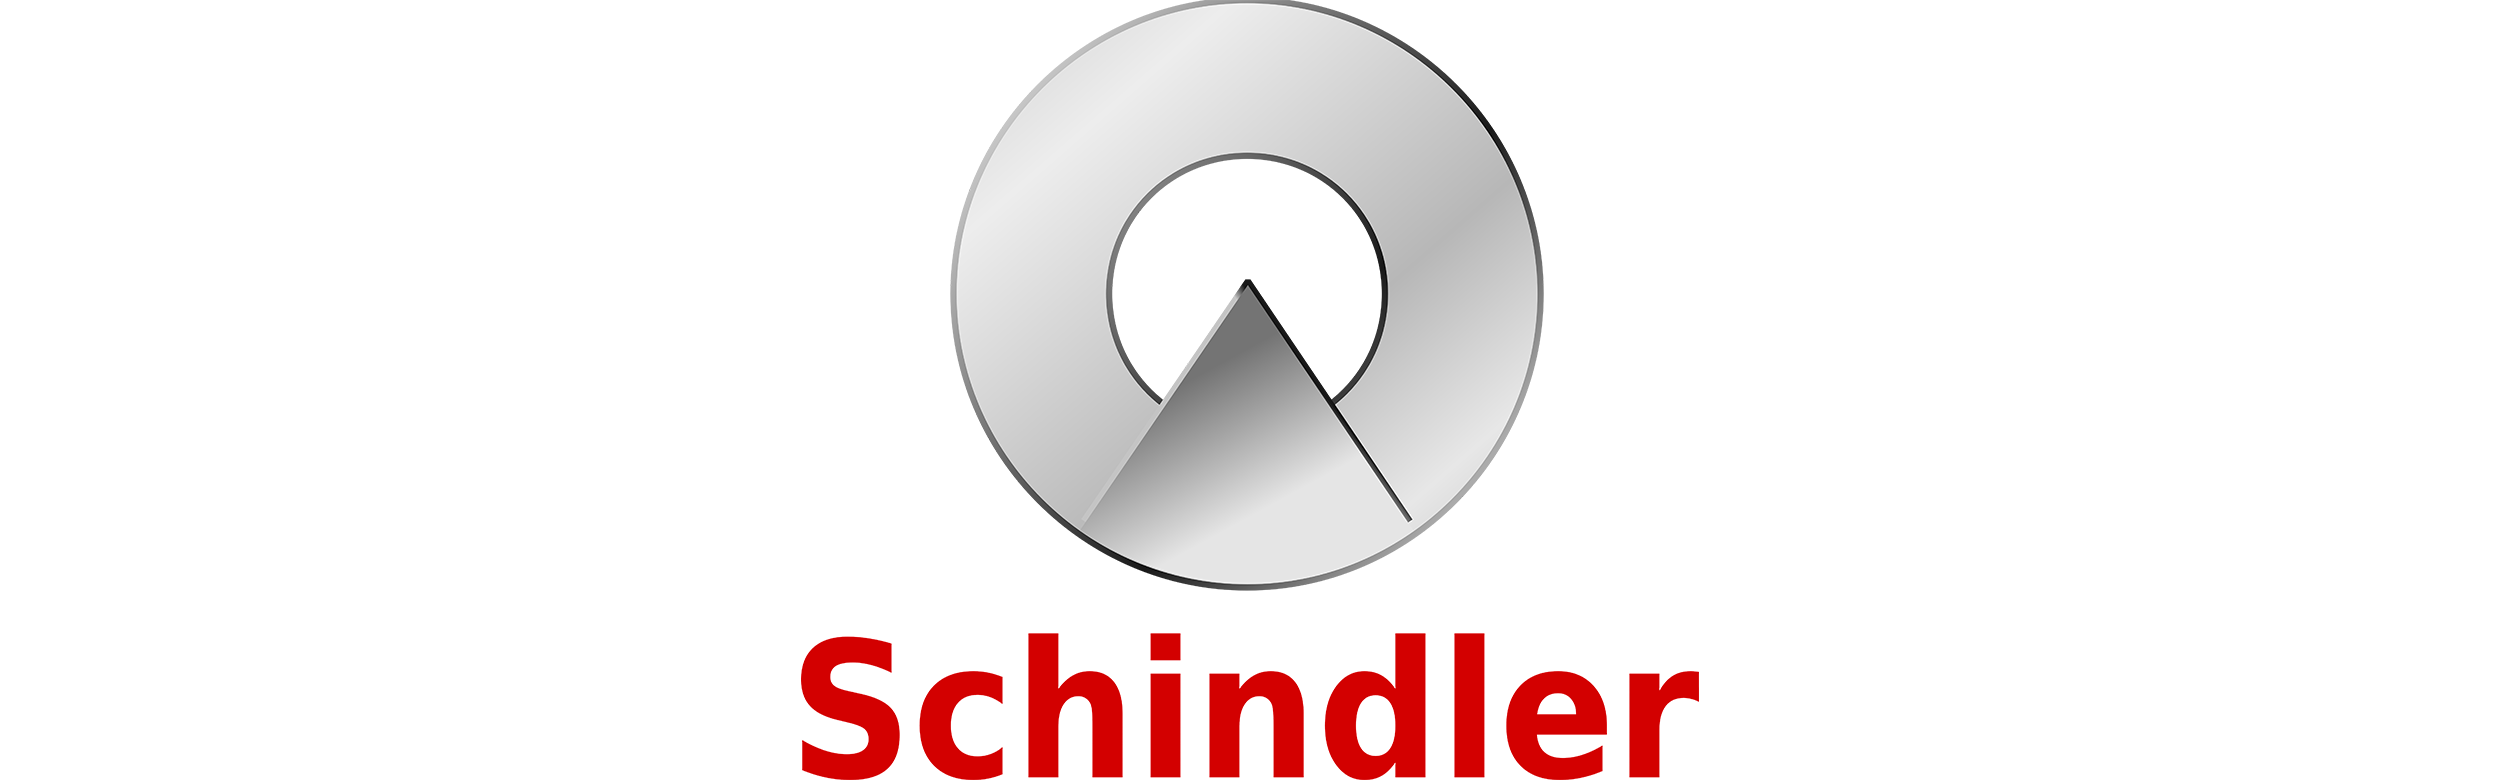 NEW Schindler elevators escalators company T-SHIRT Logo Many Color | eBay